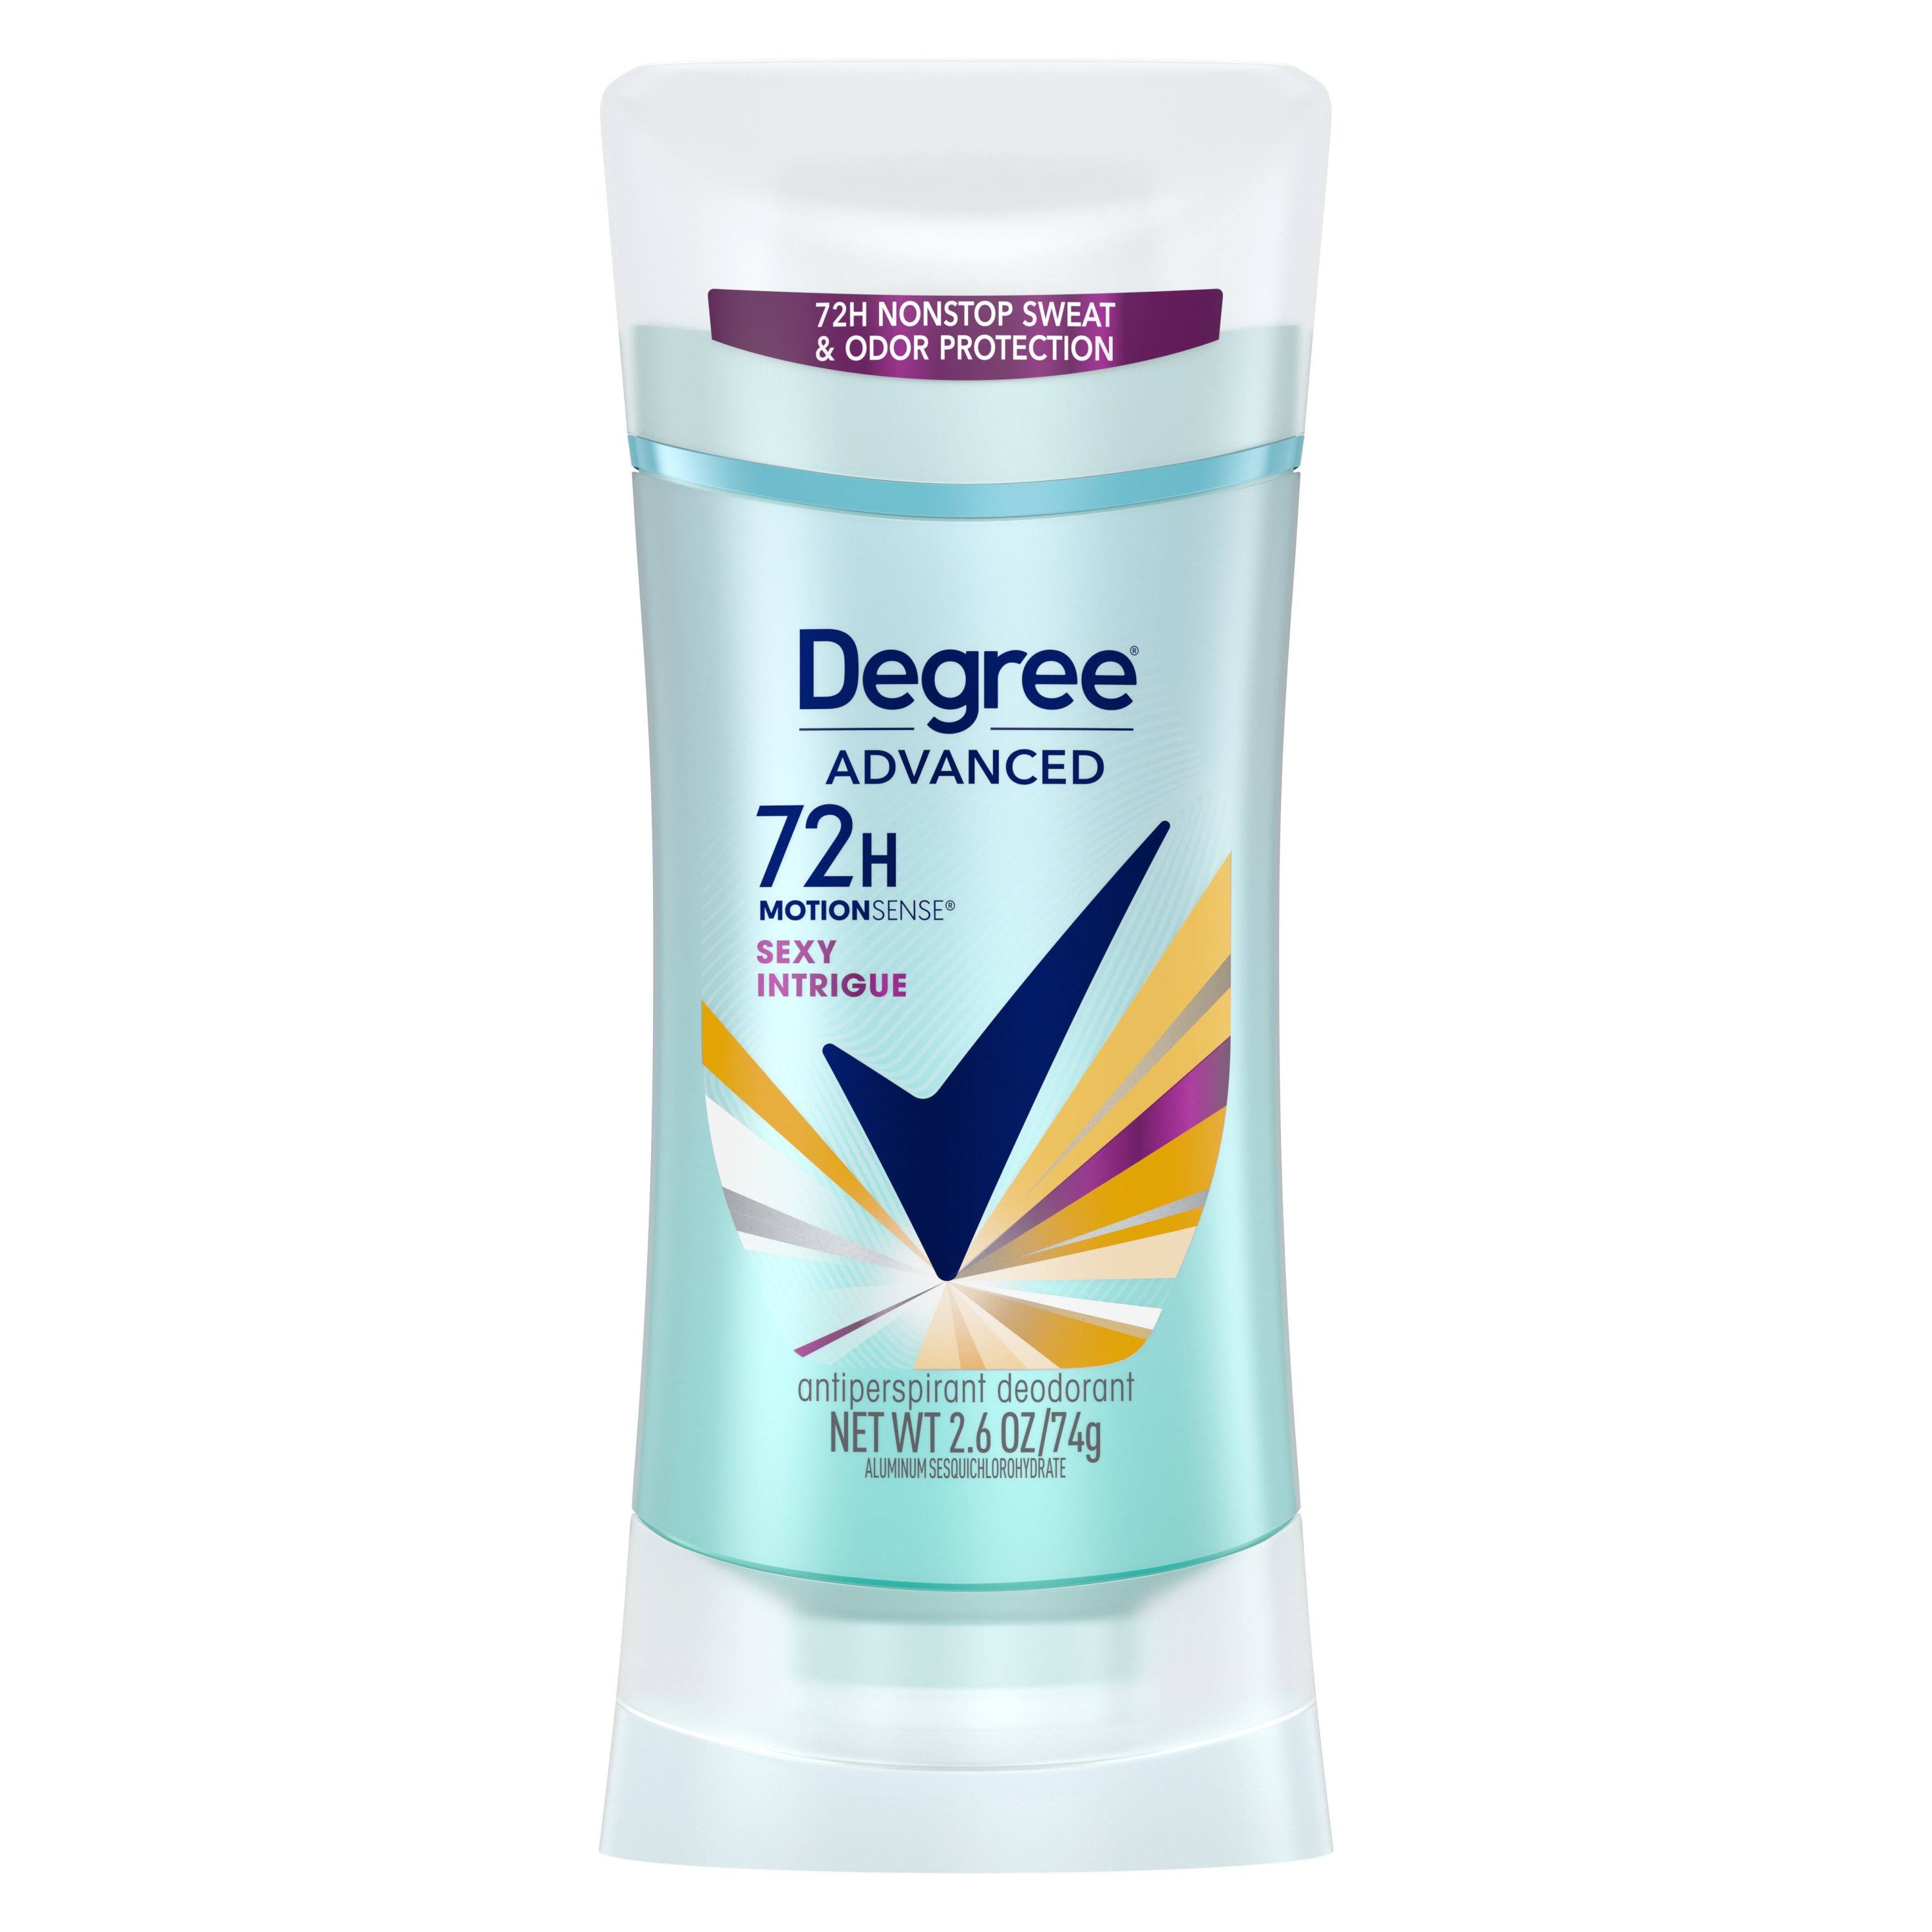 Degree Motion Sense Anti Perspirant and Deodorant - Sexy Intrigue, 2.6oz